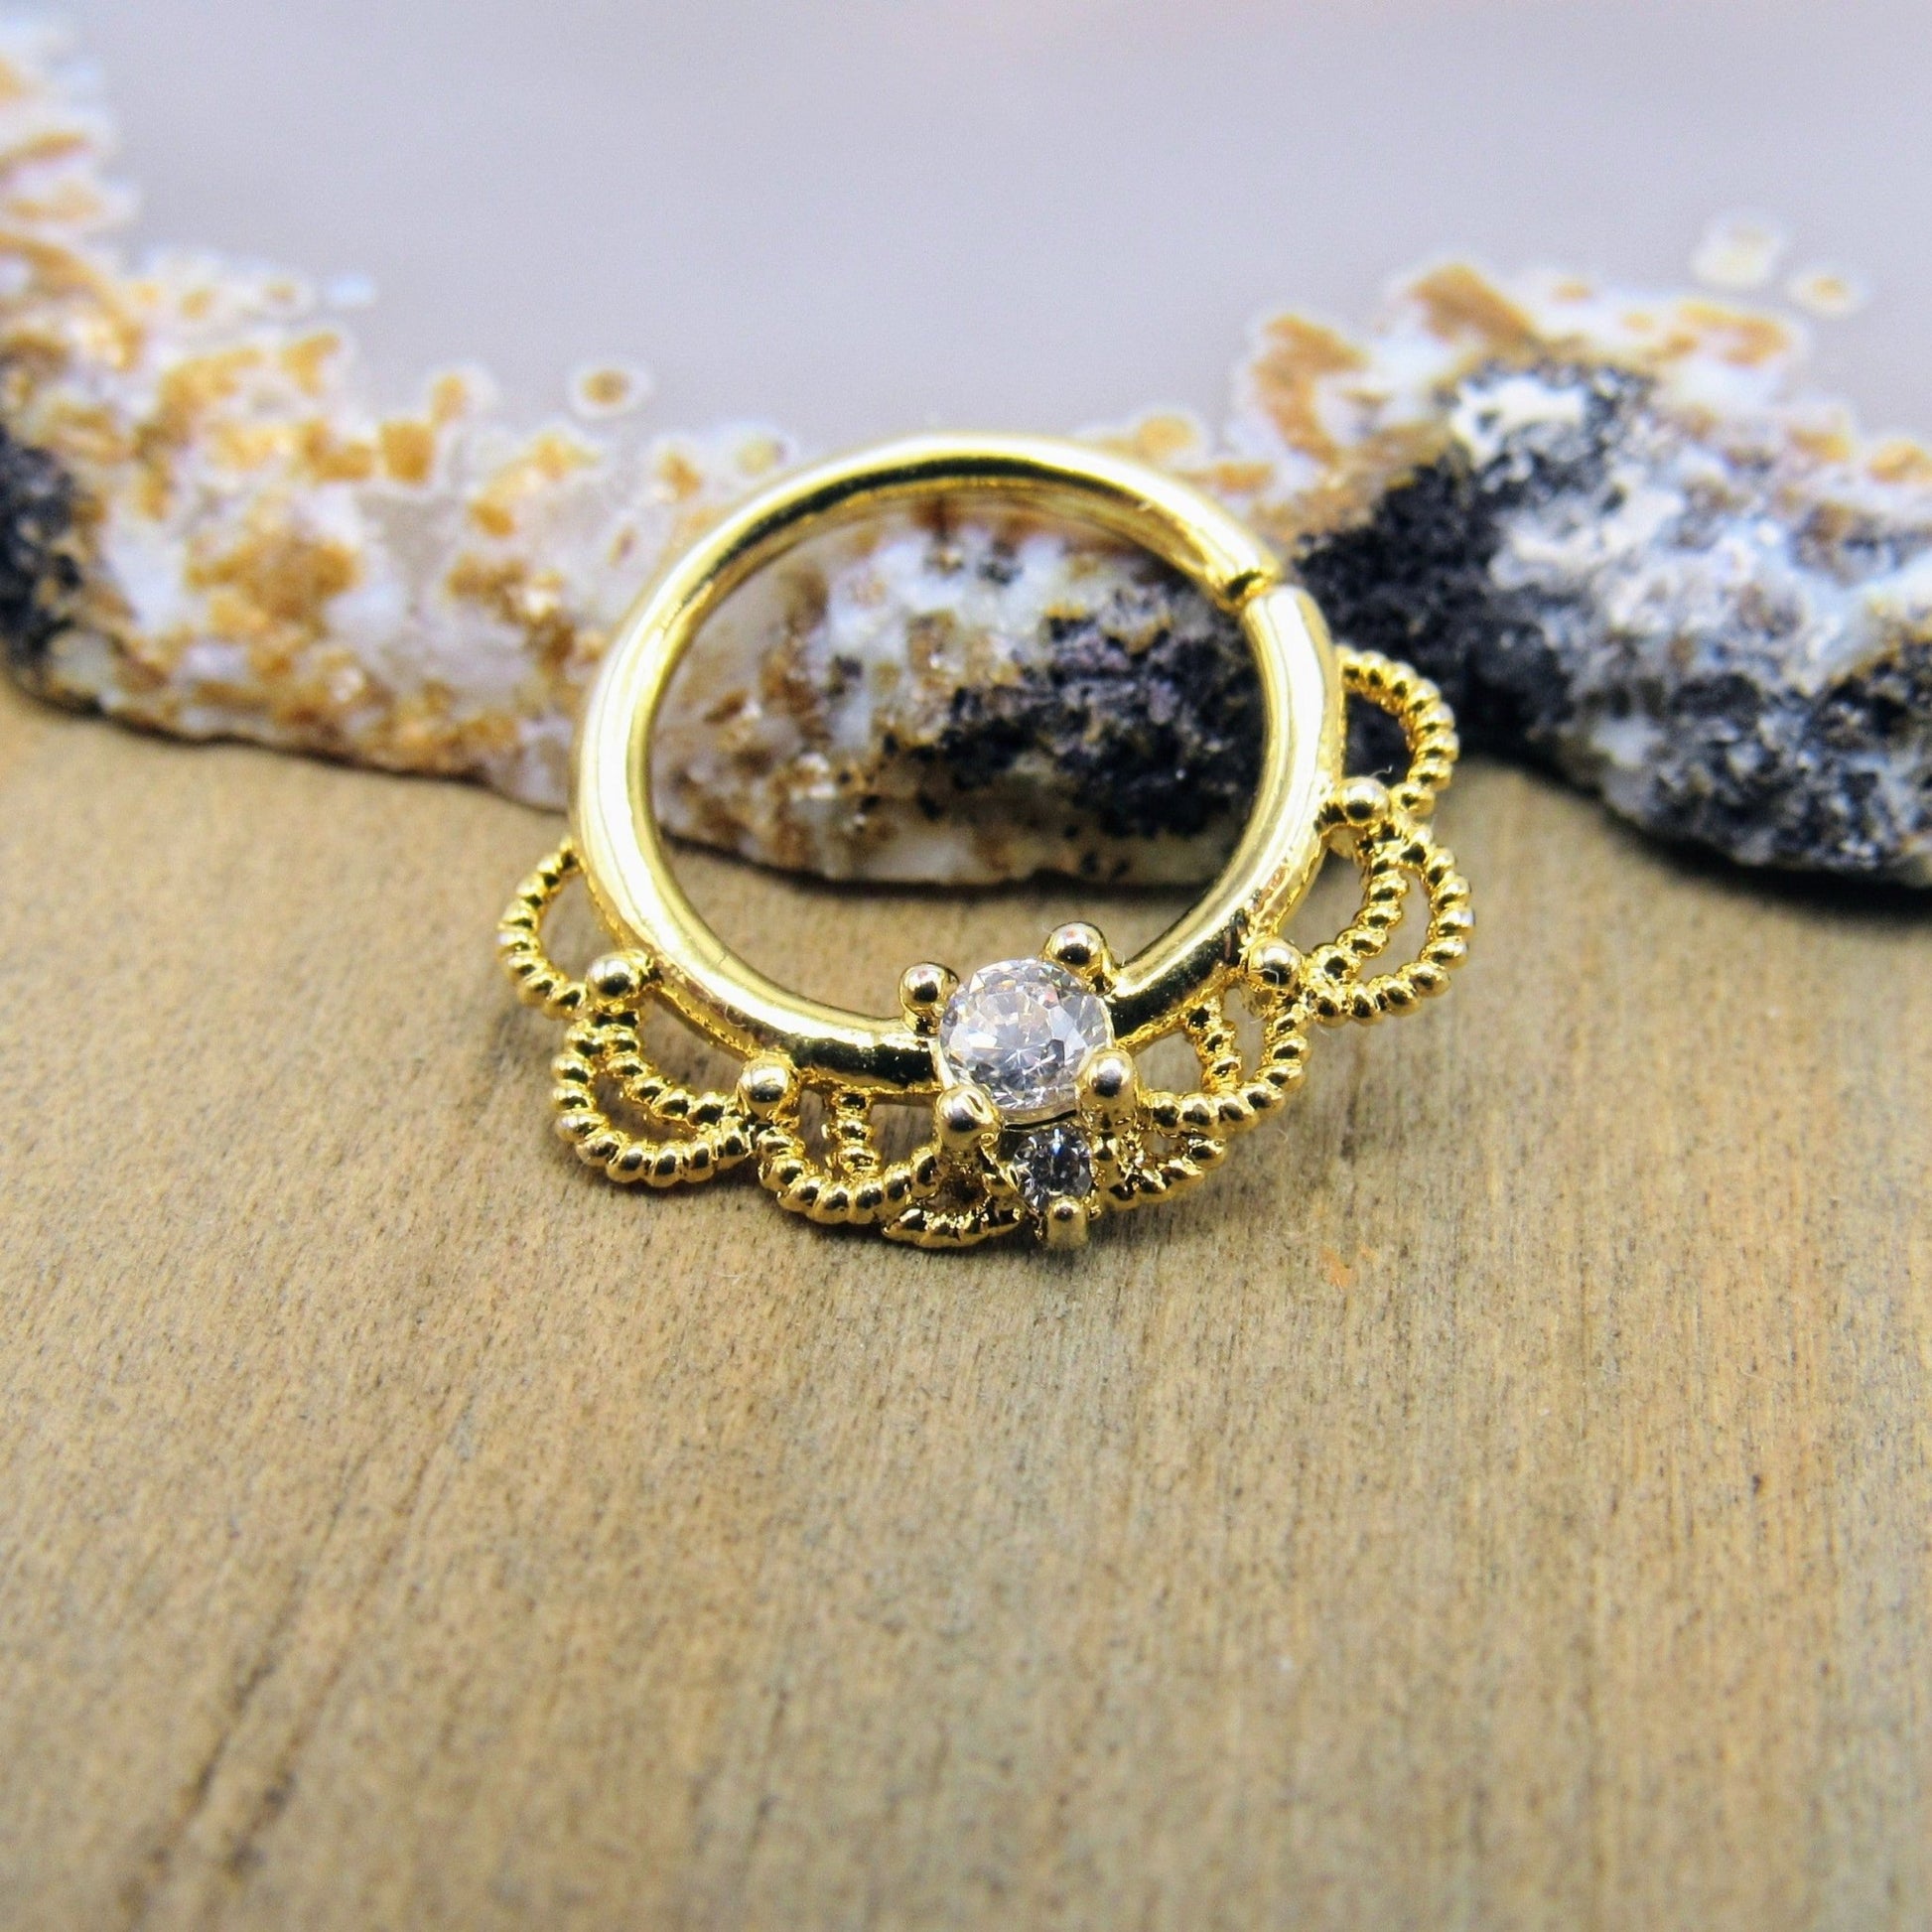 16g Gold septum ring 5/16" seam ring style 4mm cz prong set gemstone decorative filigree daith piercing earring - Siren Body Jewelry